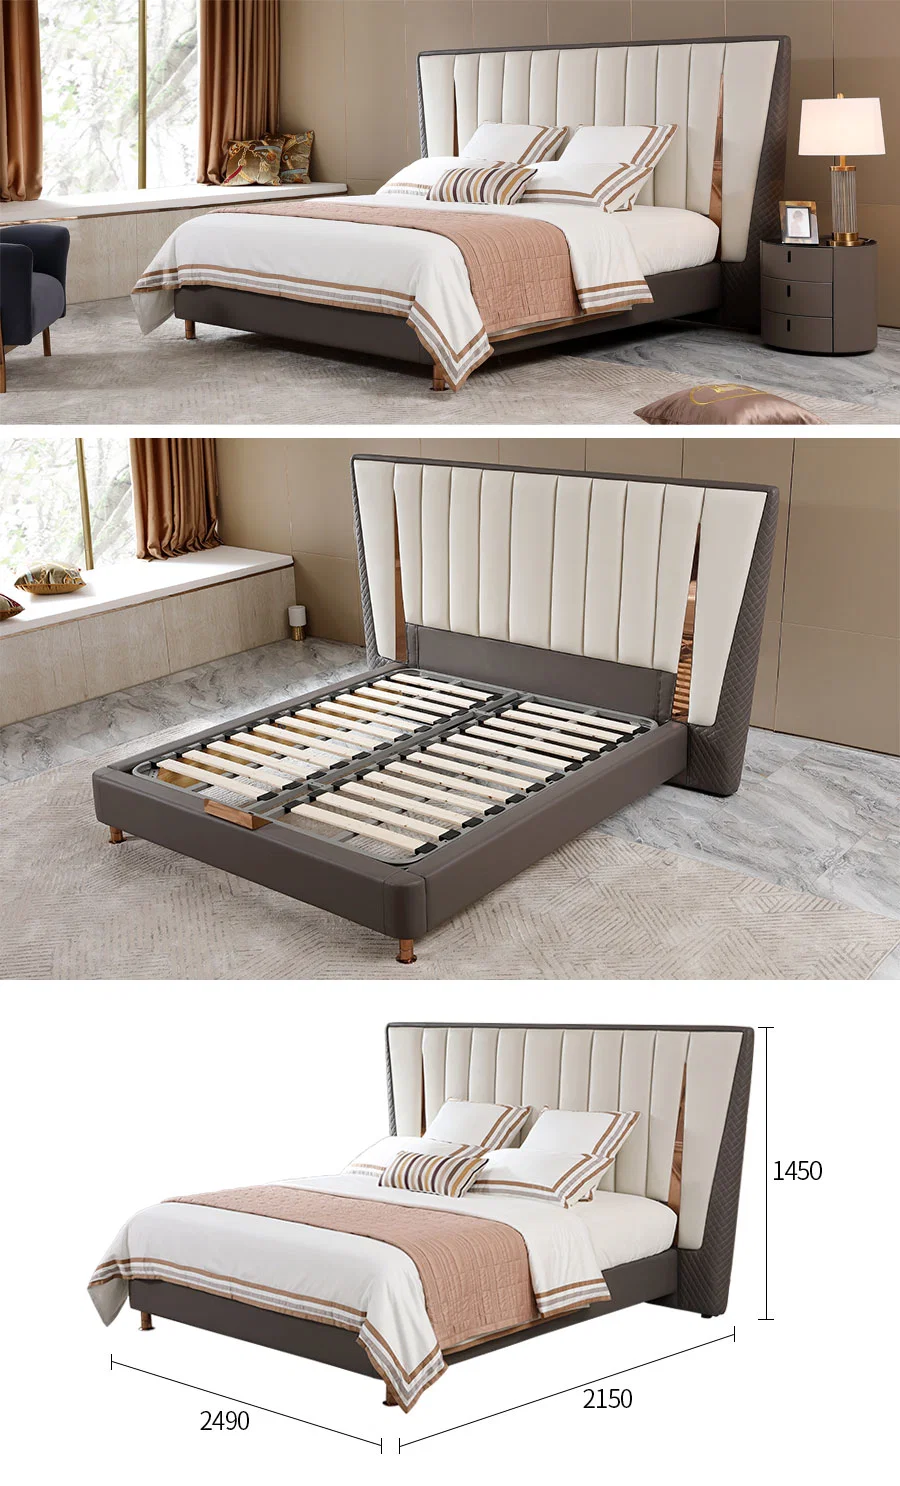 Luxury King Queen Size Full Set Leather Bed Frame Master Room 5 Star Hotel Modern Furniture Bedroom Set